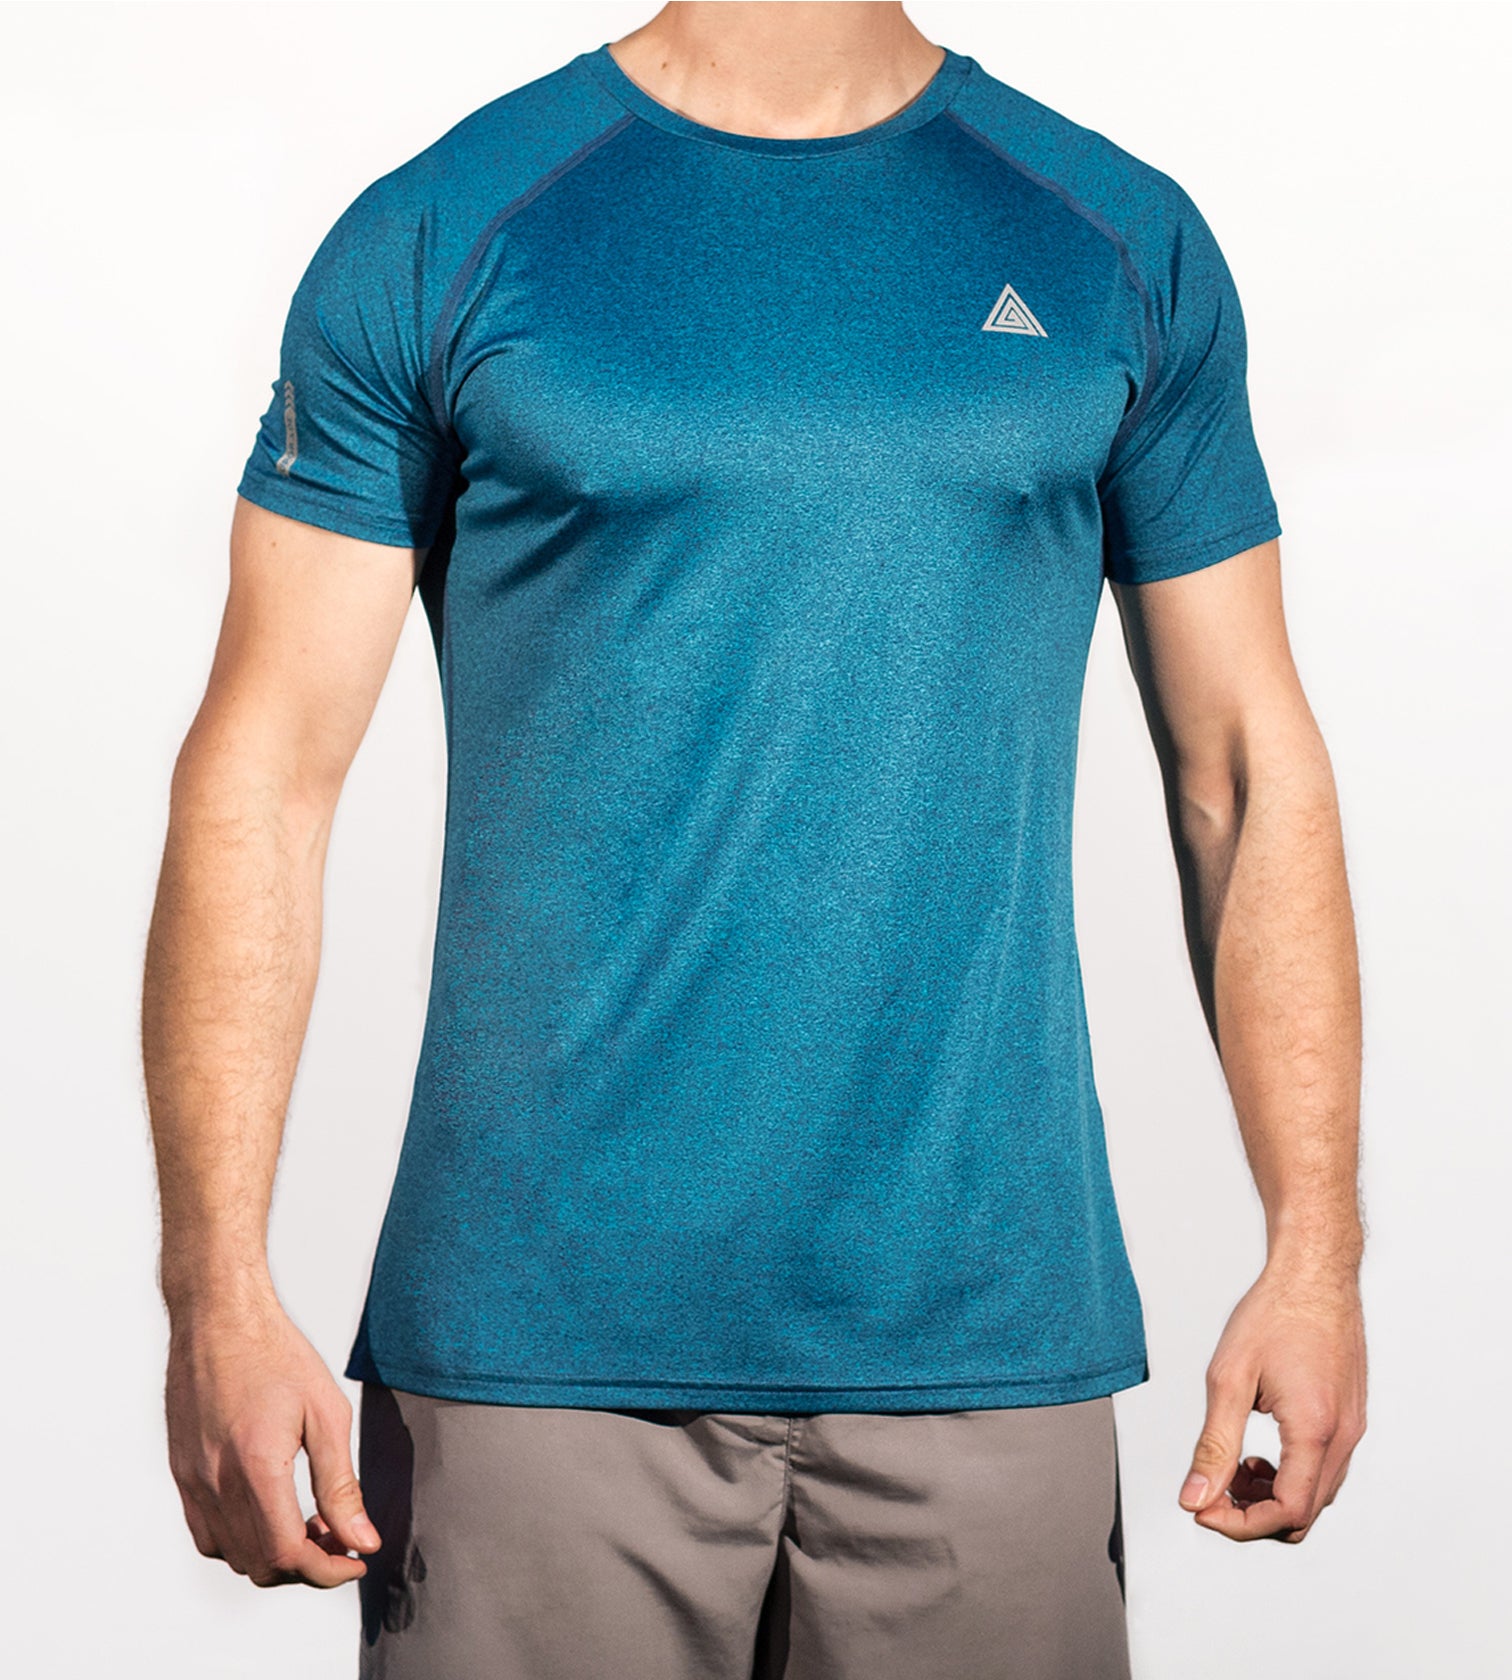 Camisetas técnicas de running: guía de compra